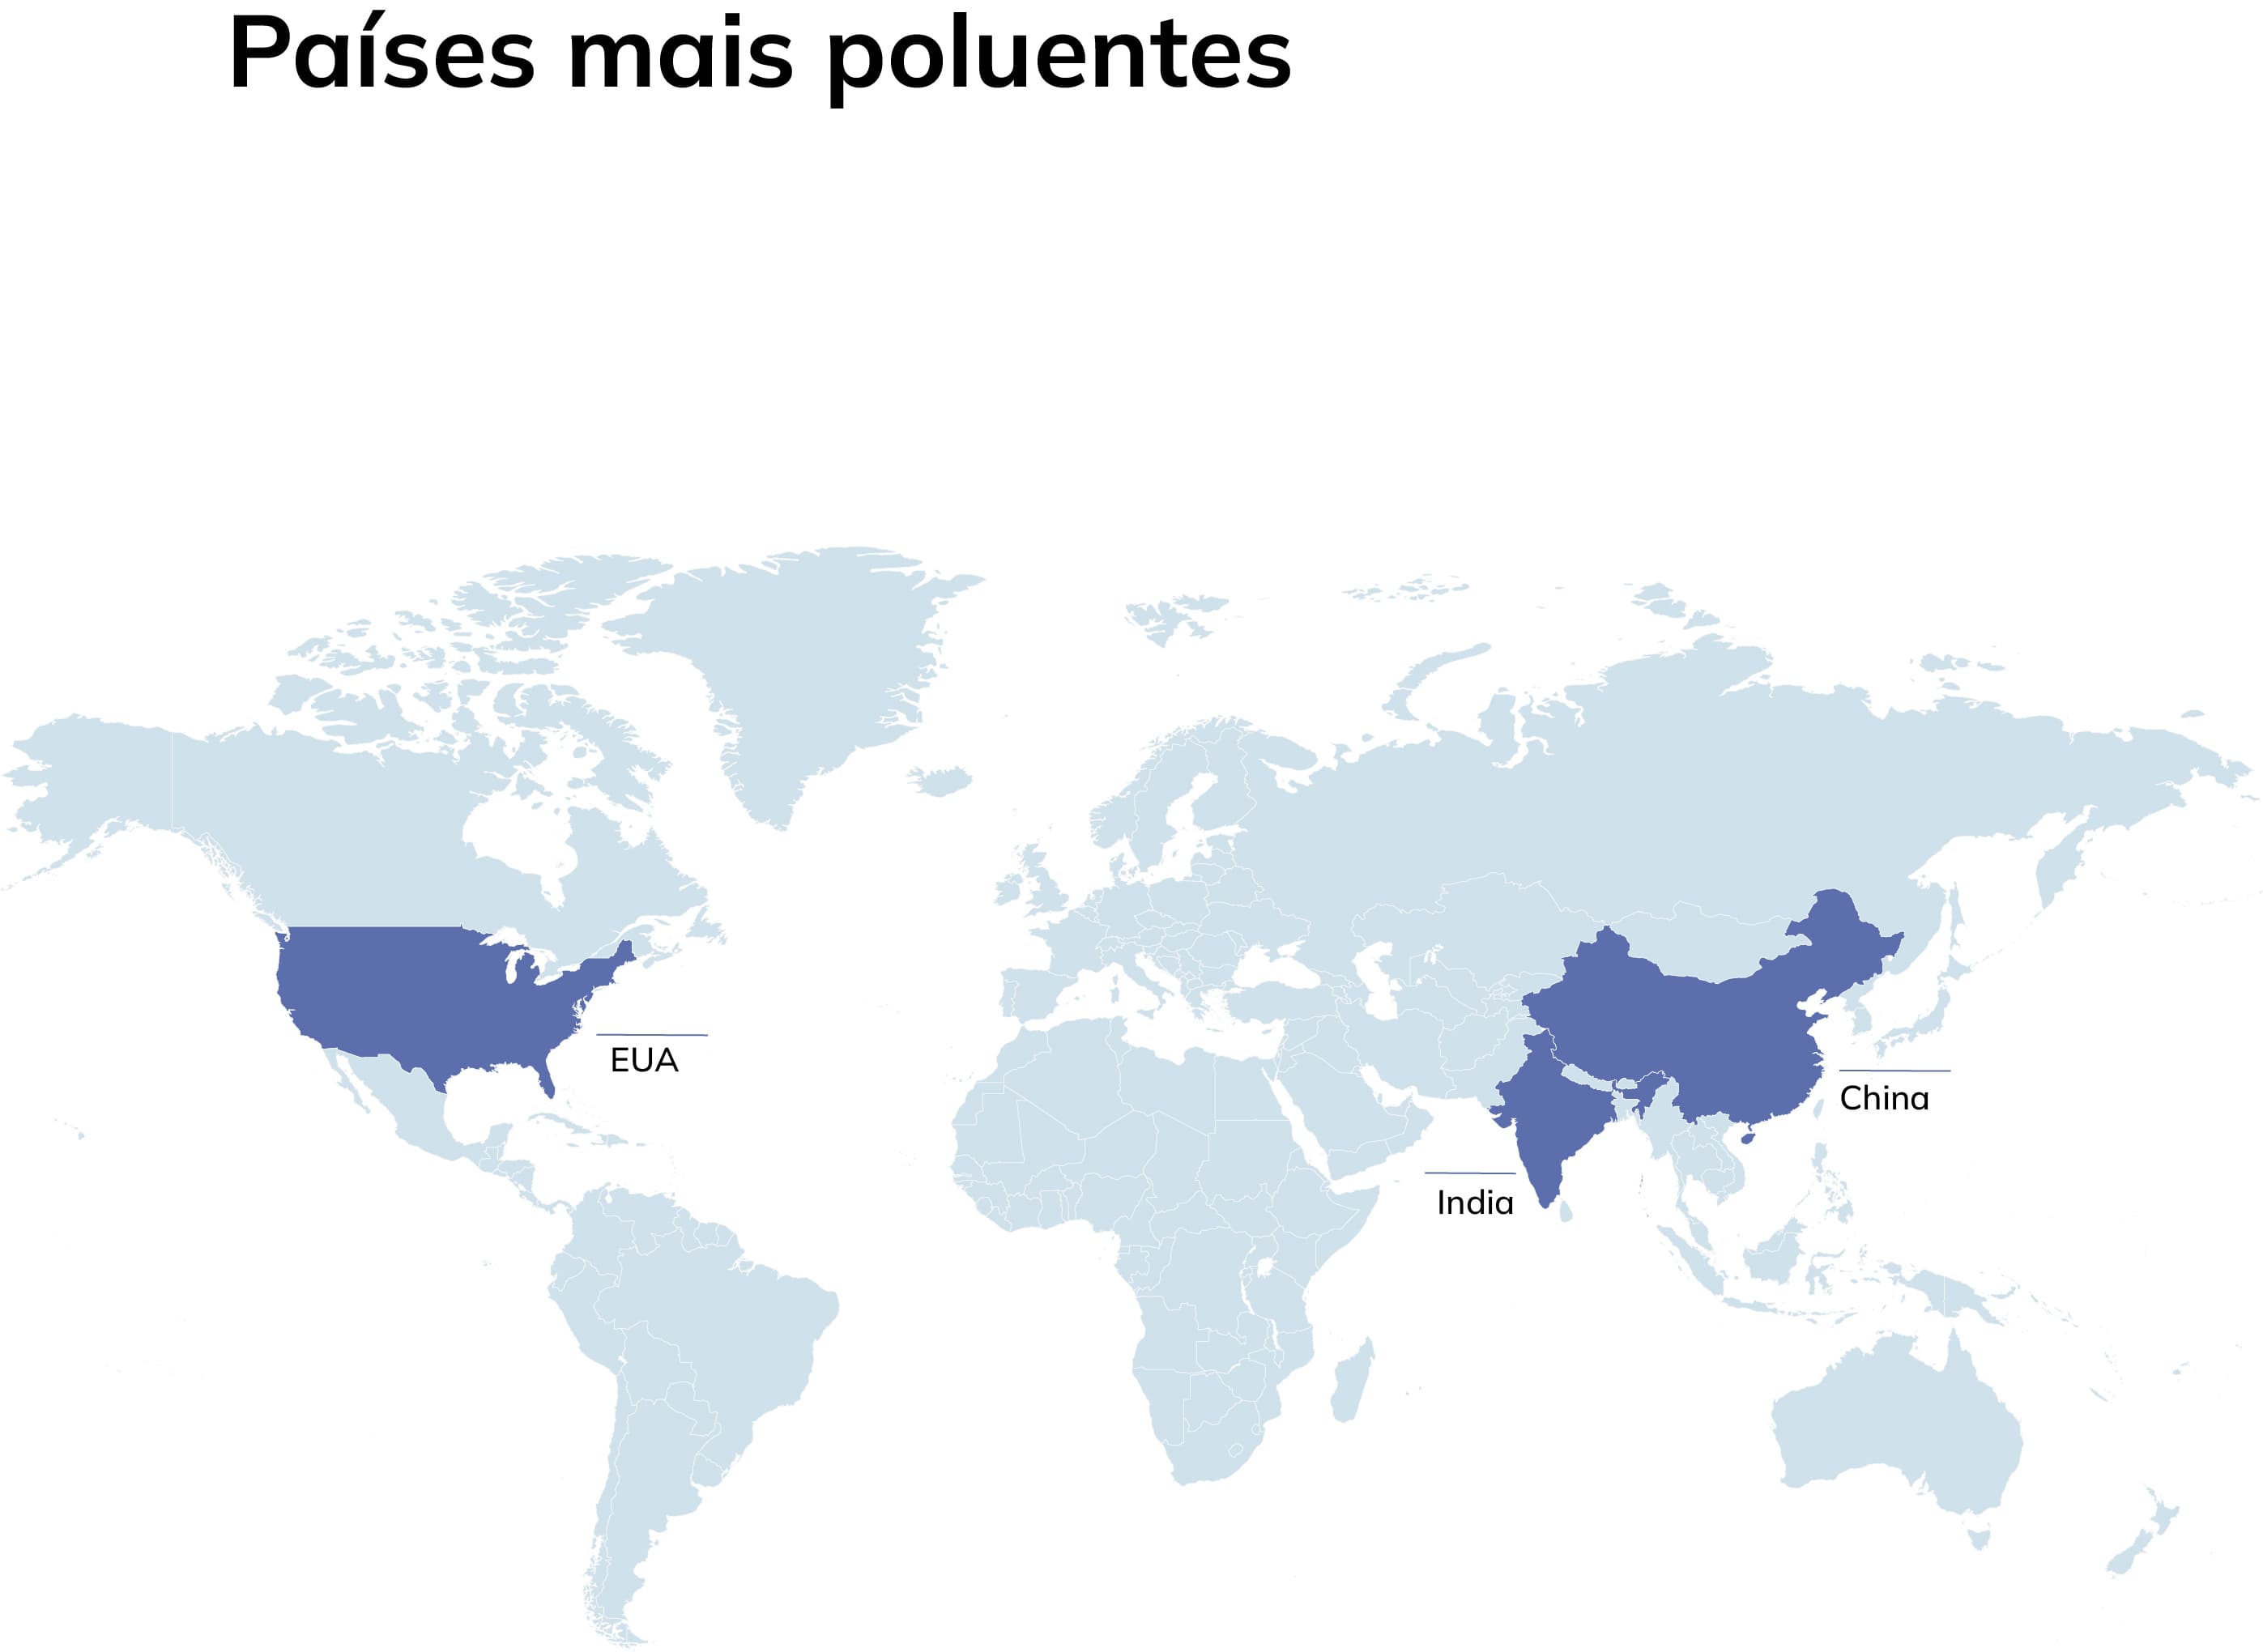 Países mais poluentes